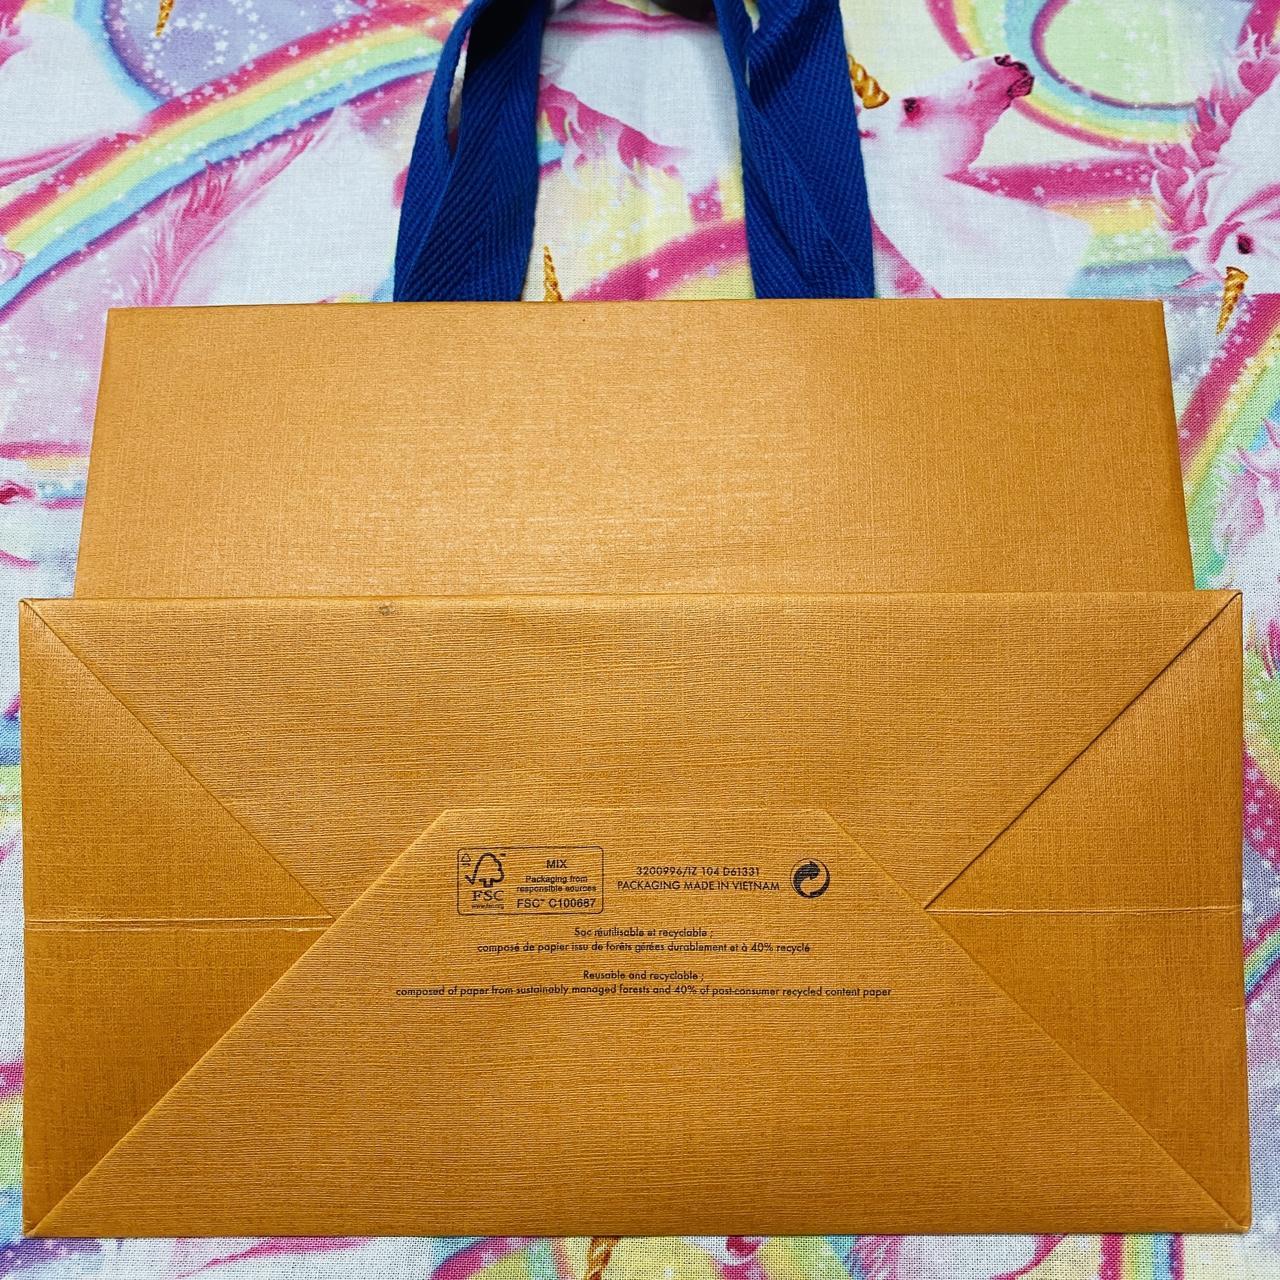 Louis Vuitton orange shopping bags with blue handle - Depop